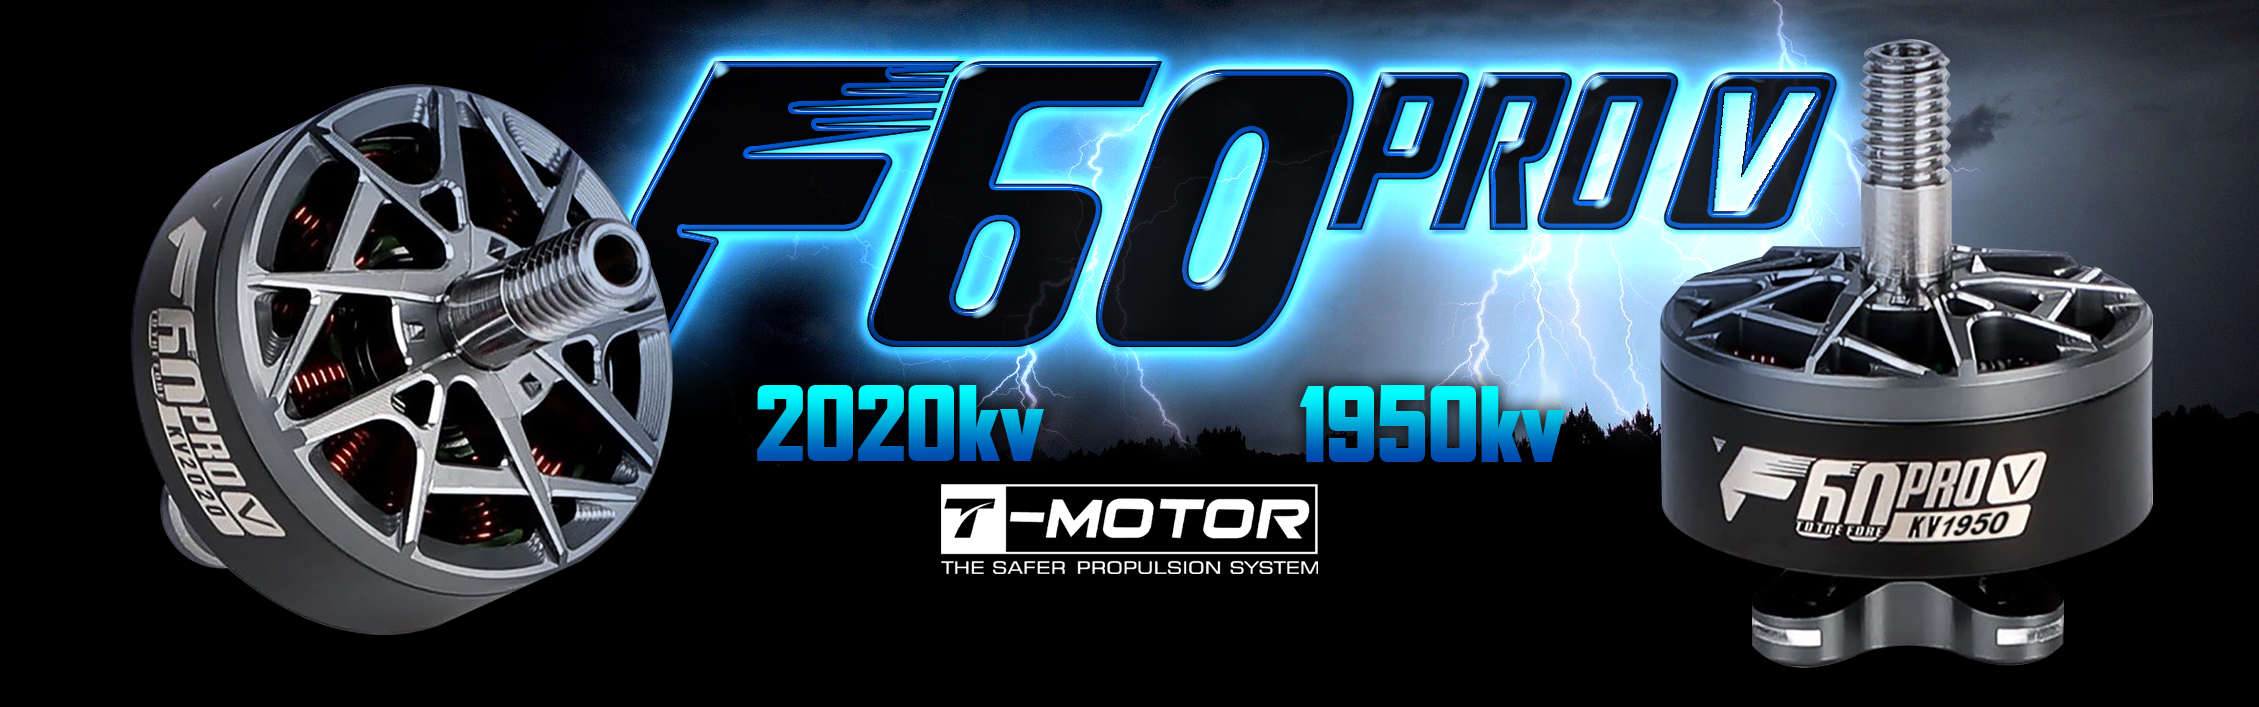 After testing the the new✨T-Motor F60 Pro v5 LV 2020 kv ✨(Lite